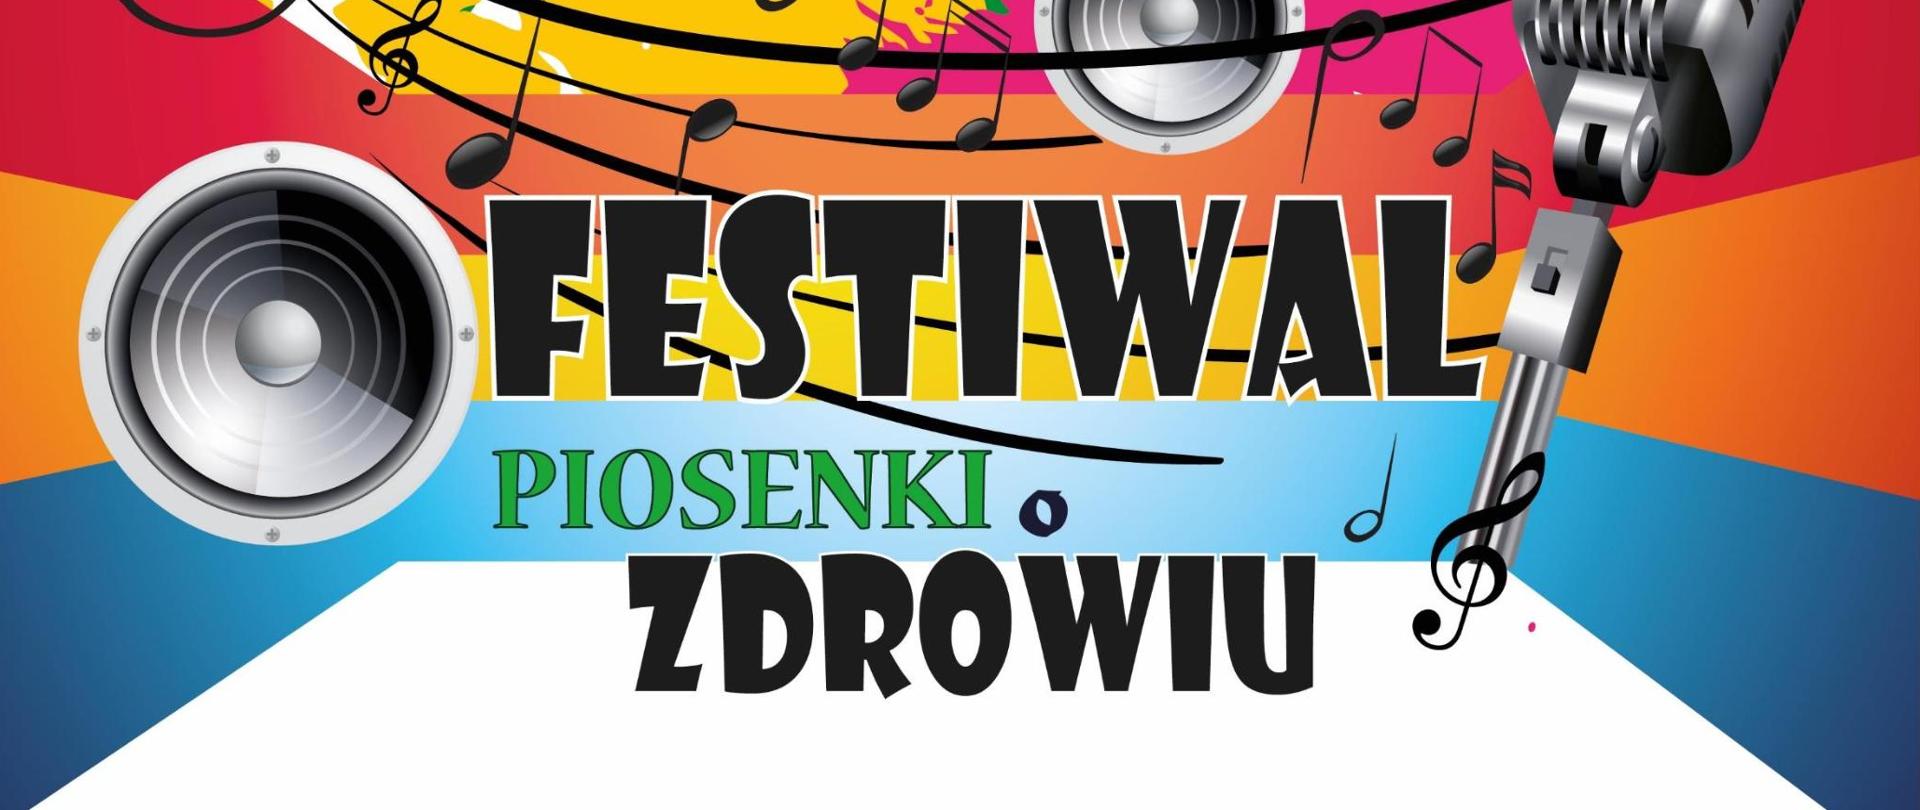 31. Festiwal Piosenki o Zdrowiu.